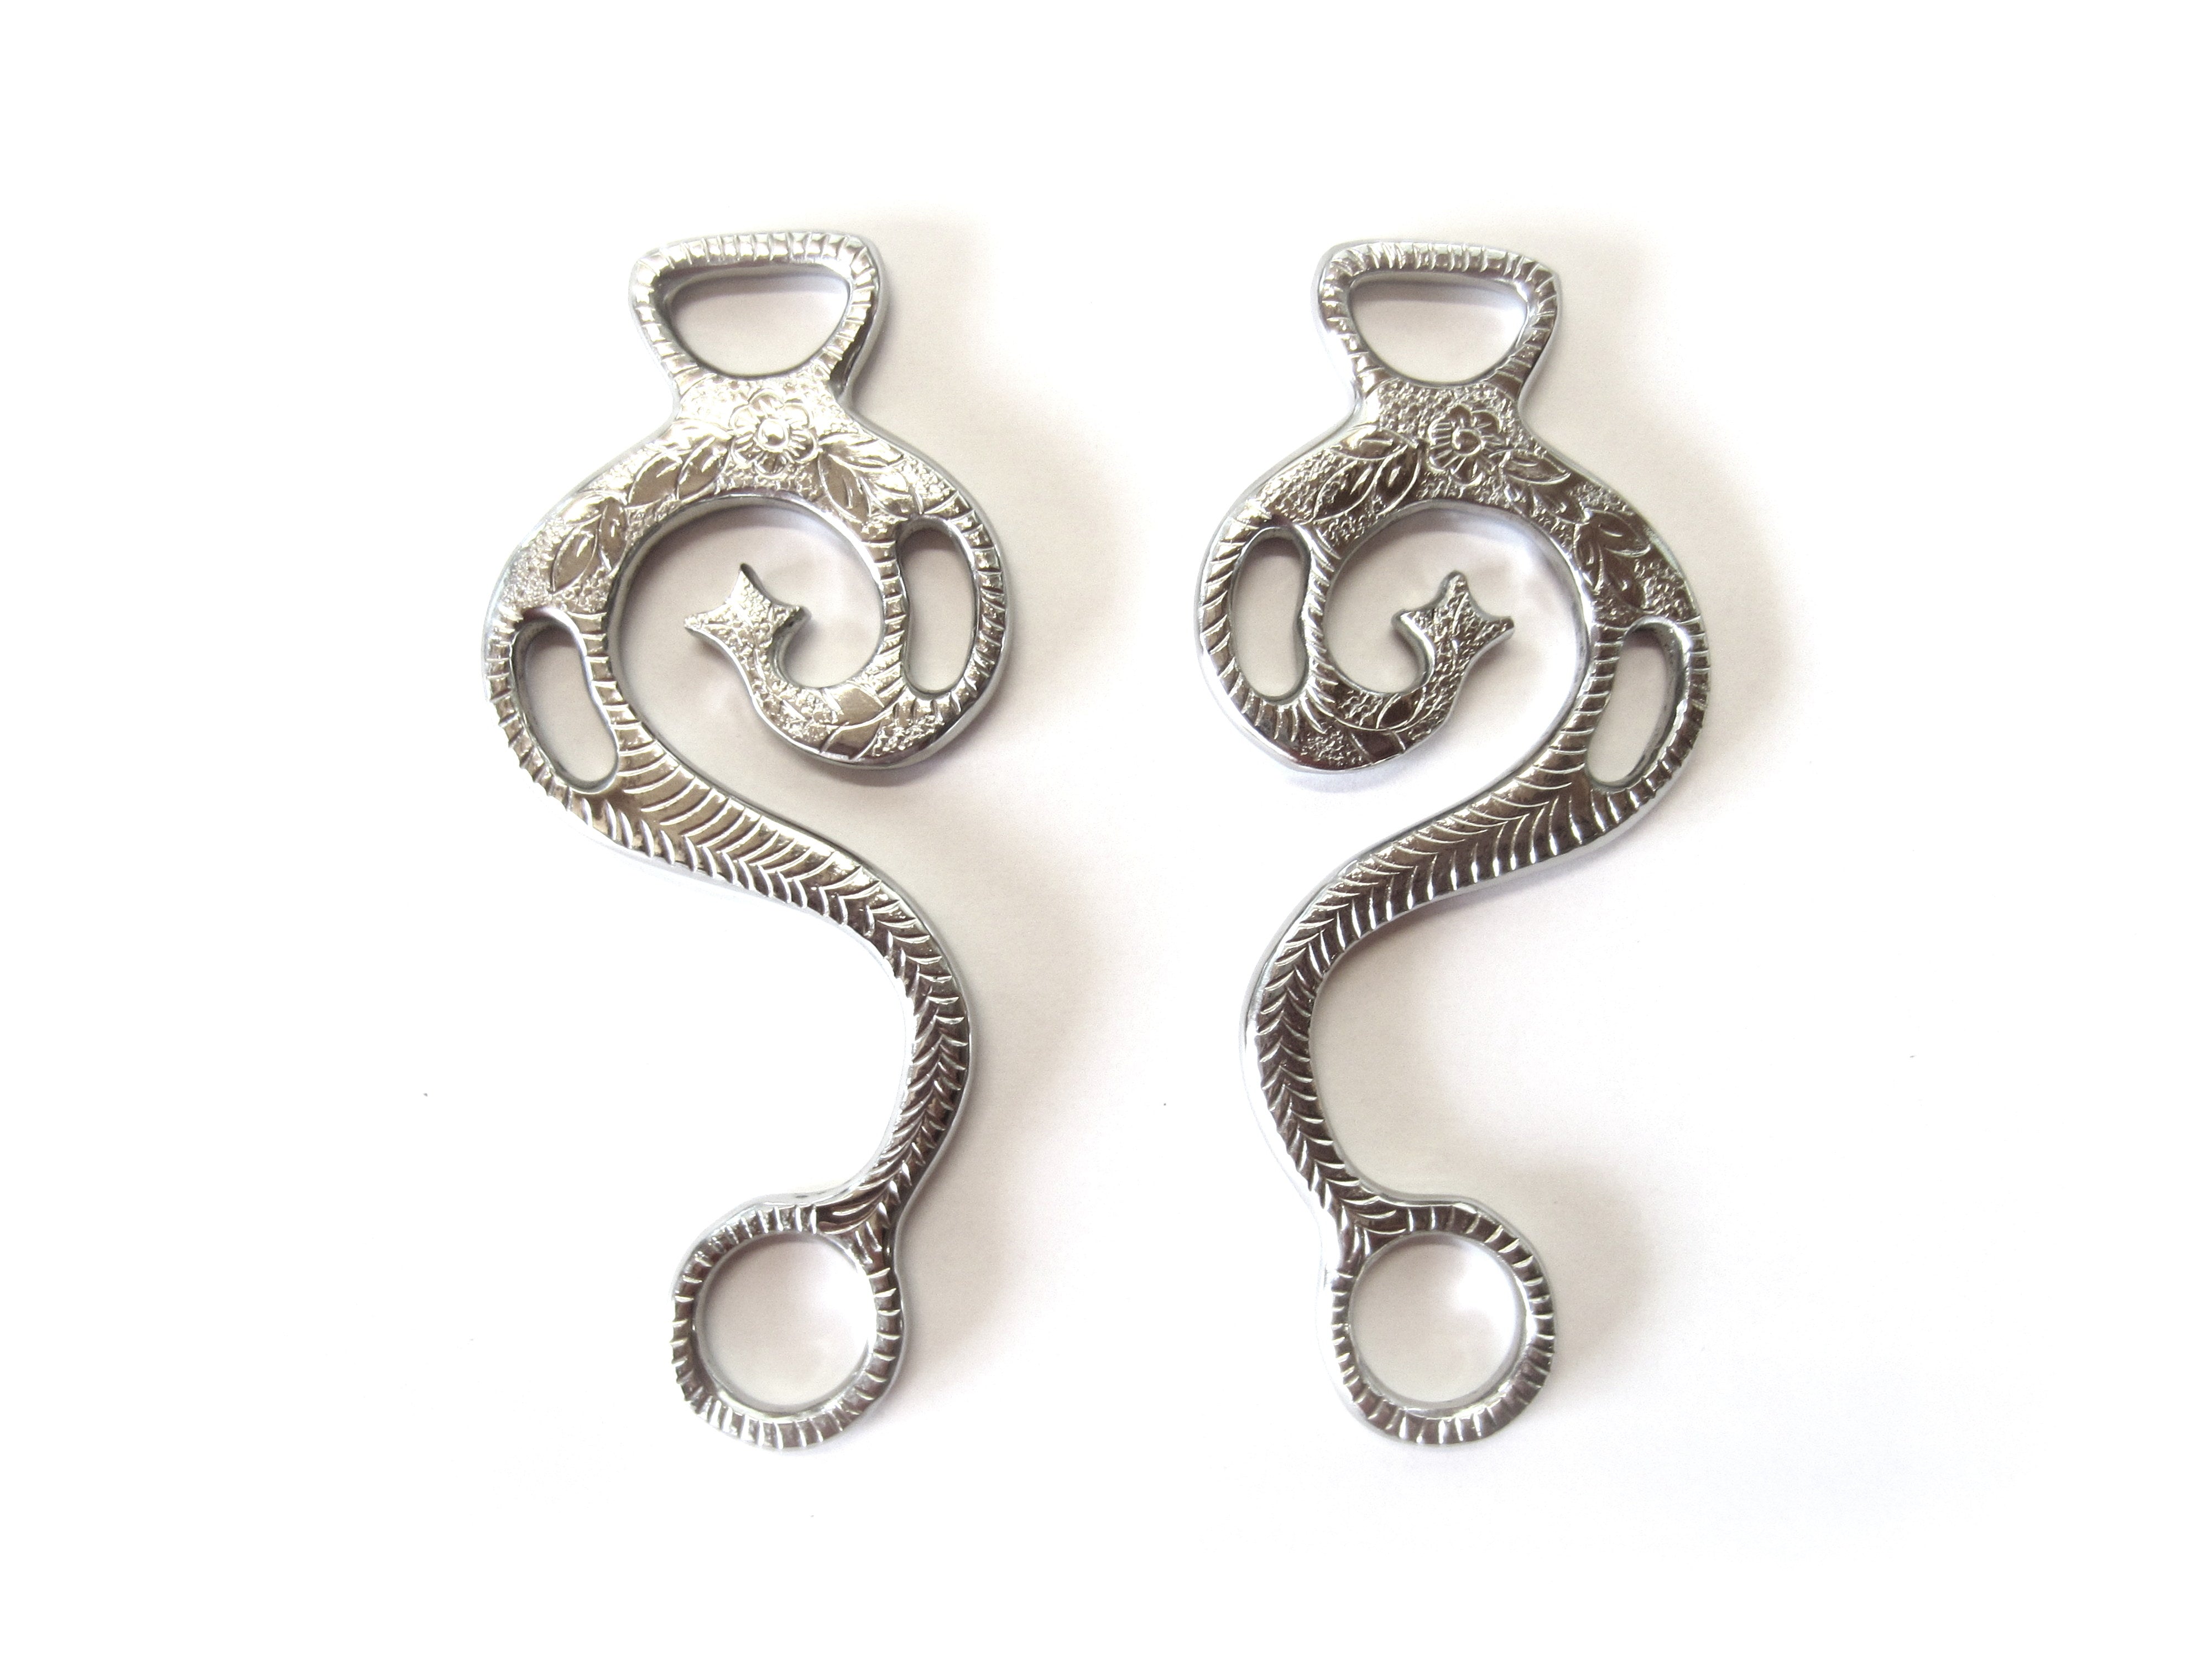 1 pair of Hackamore "Baroque" shanks - silver decorated